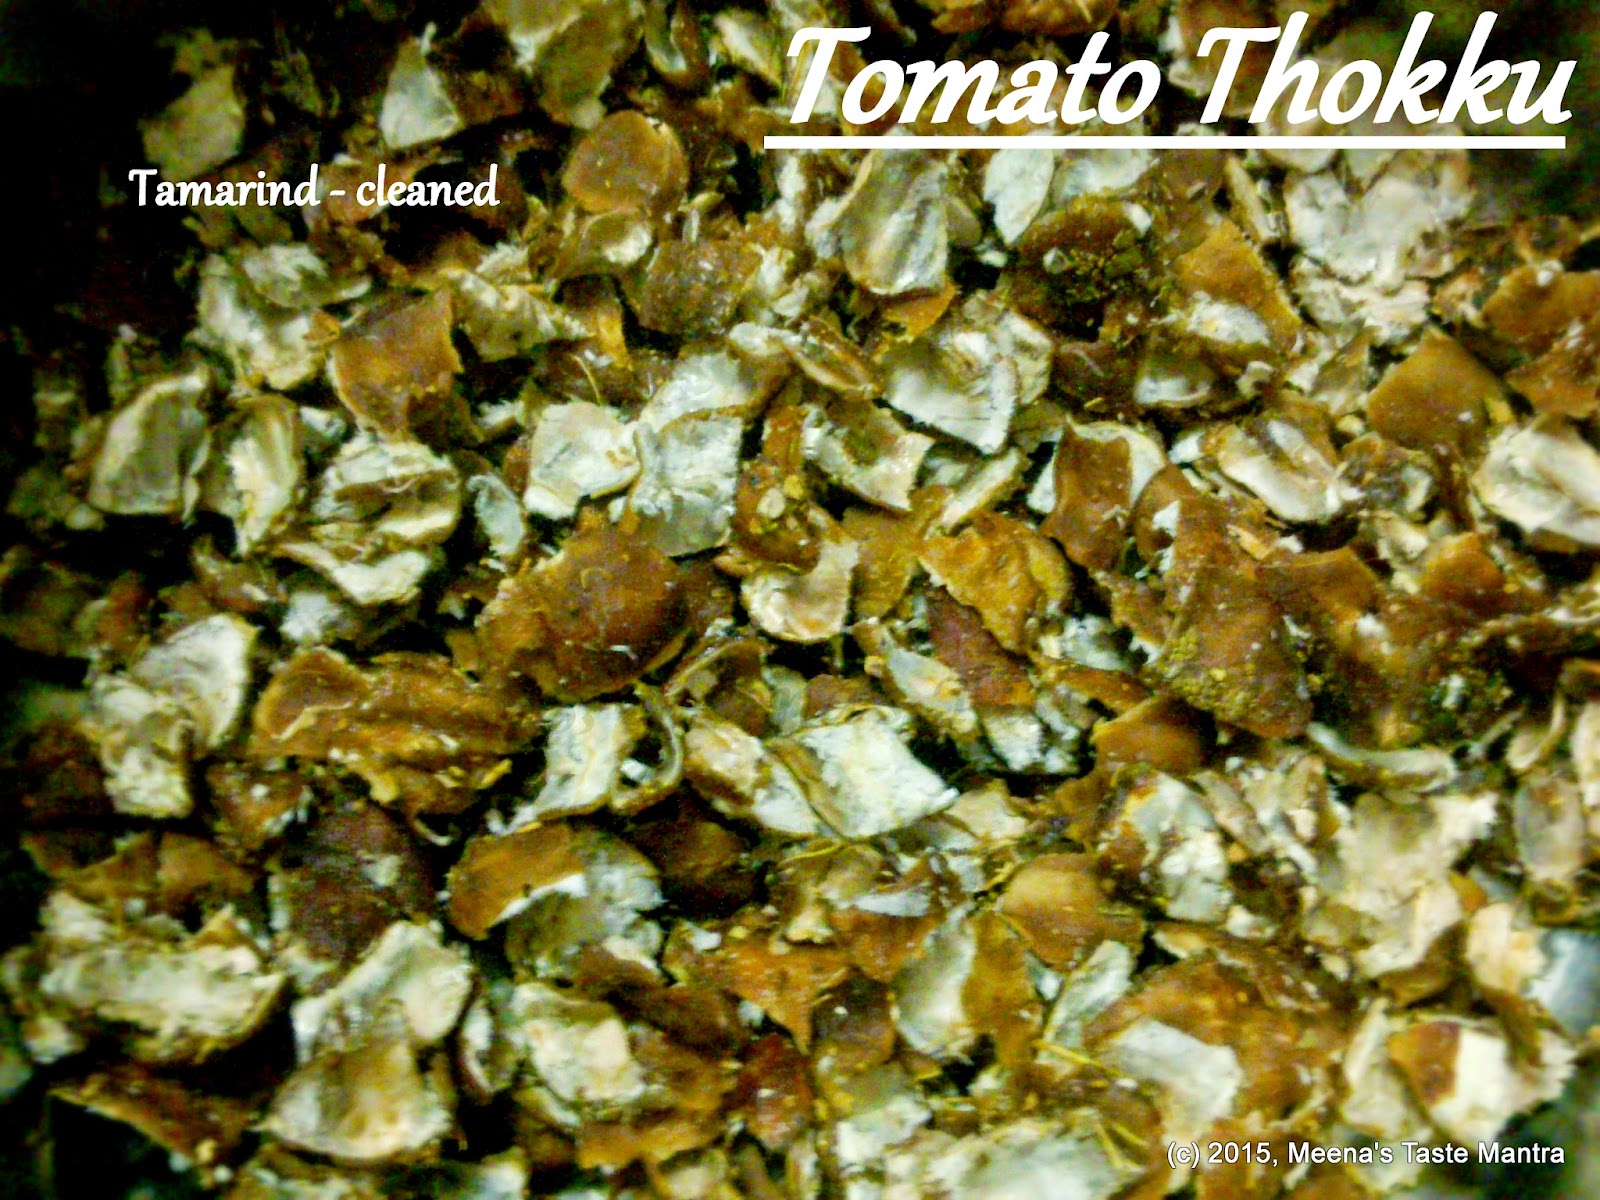 Tomato Thokku - Tamarind cleaned